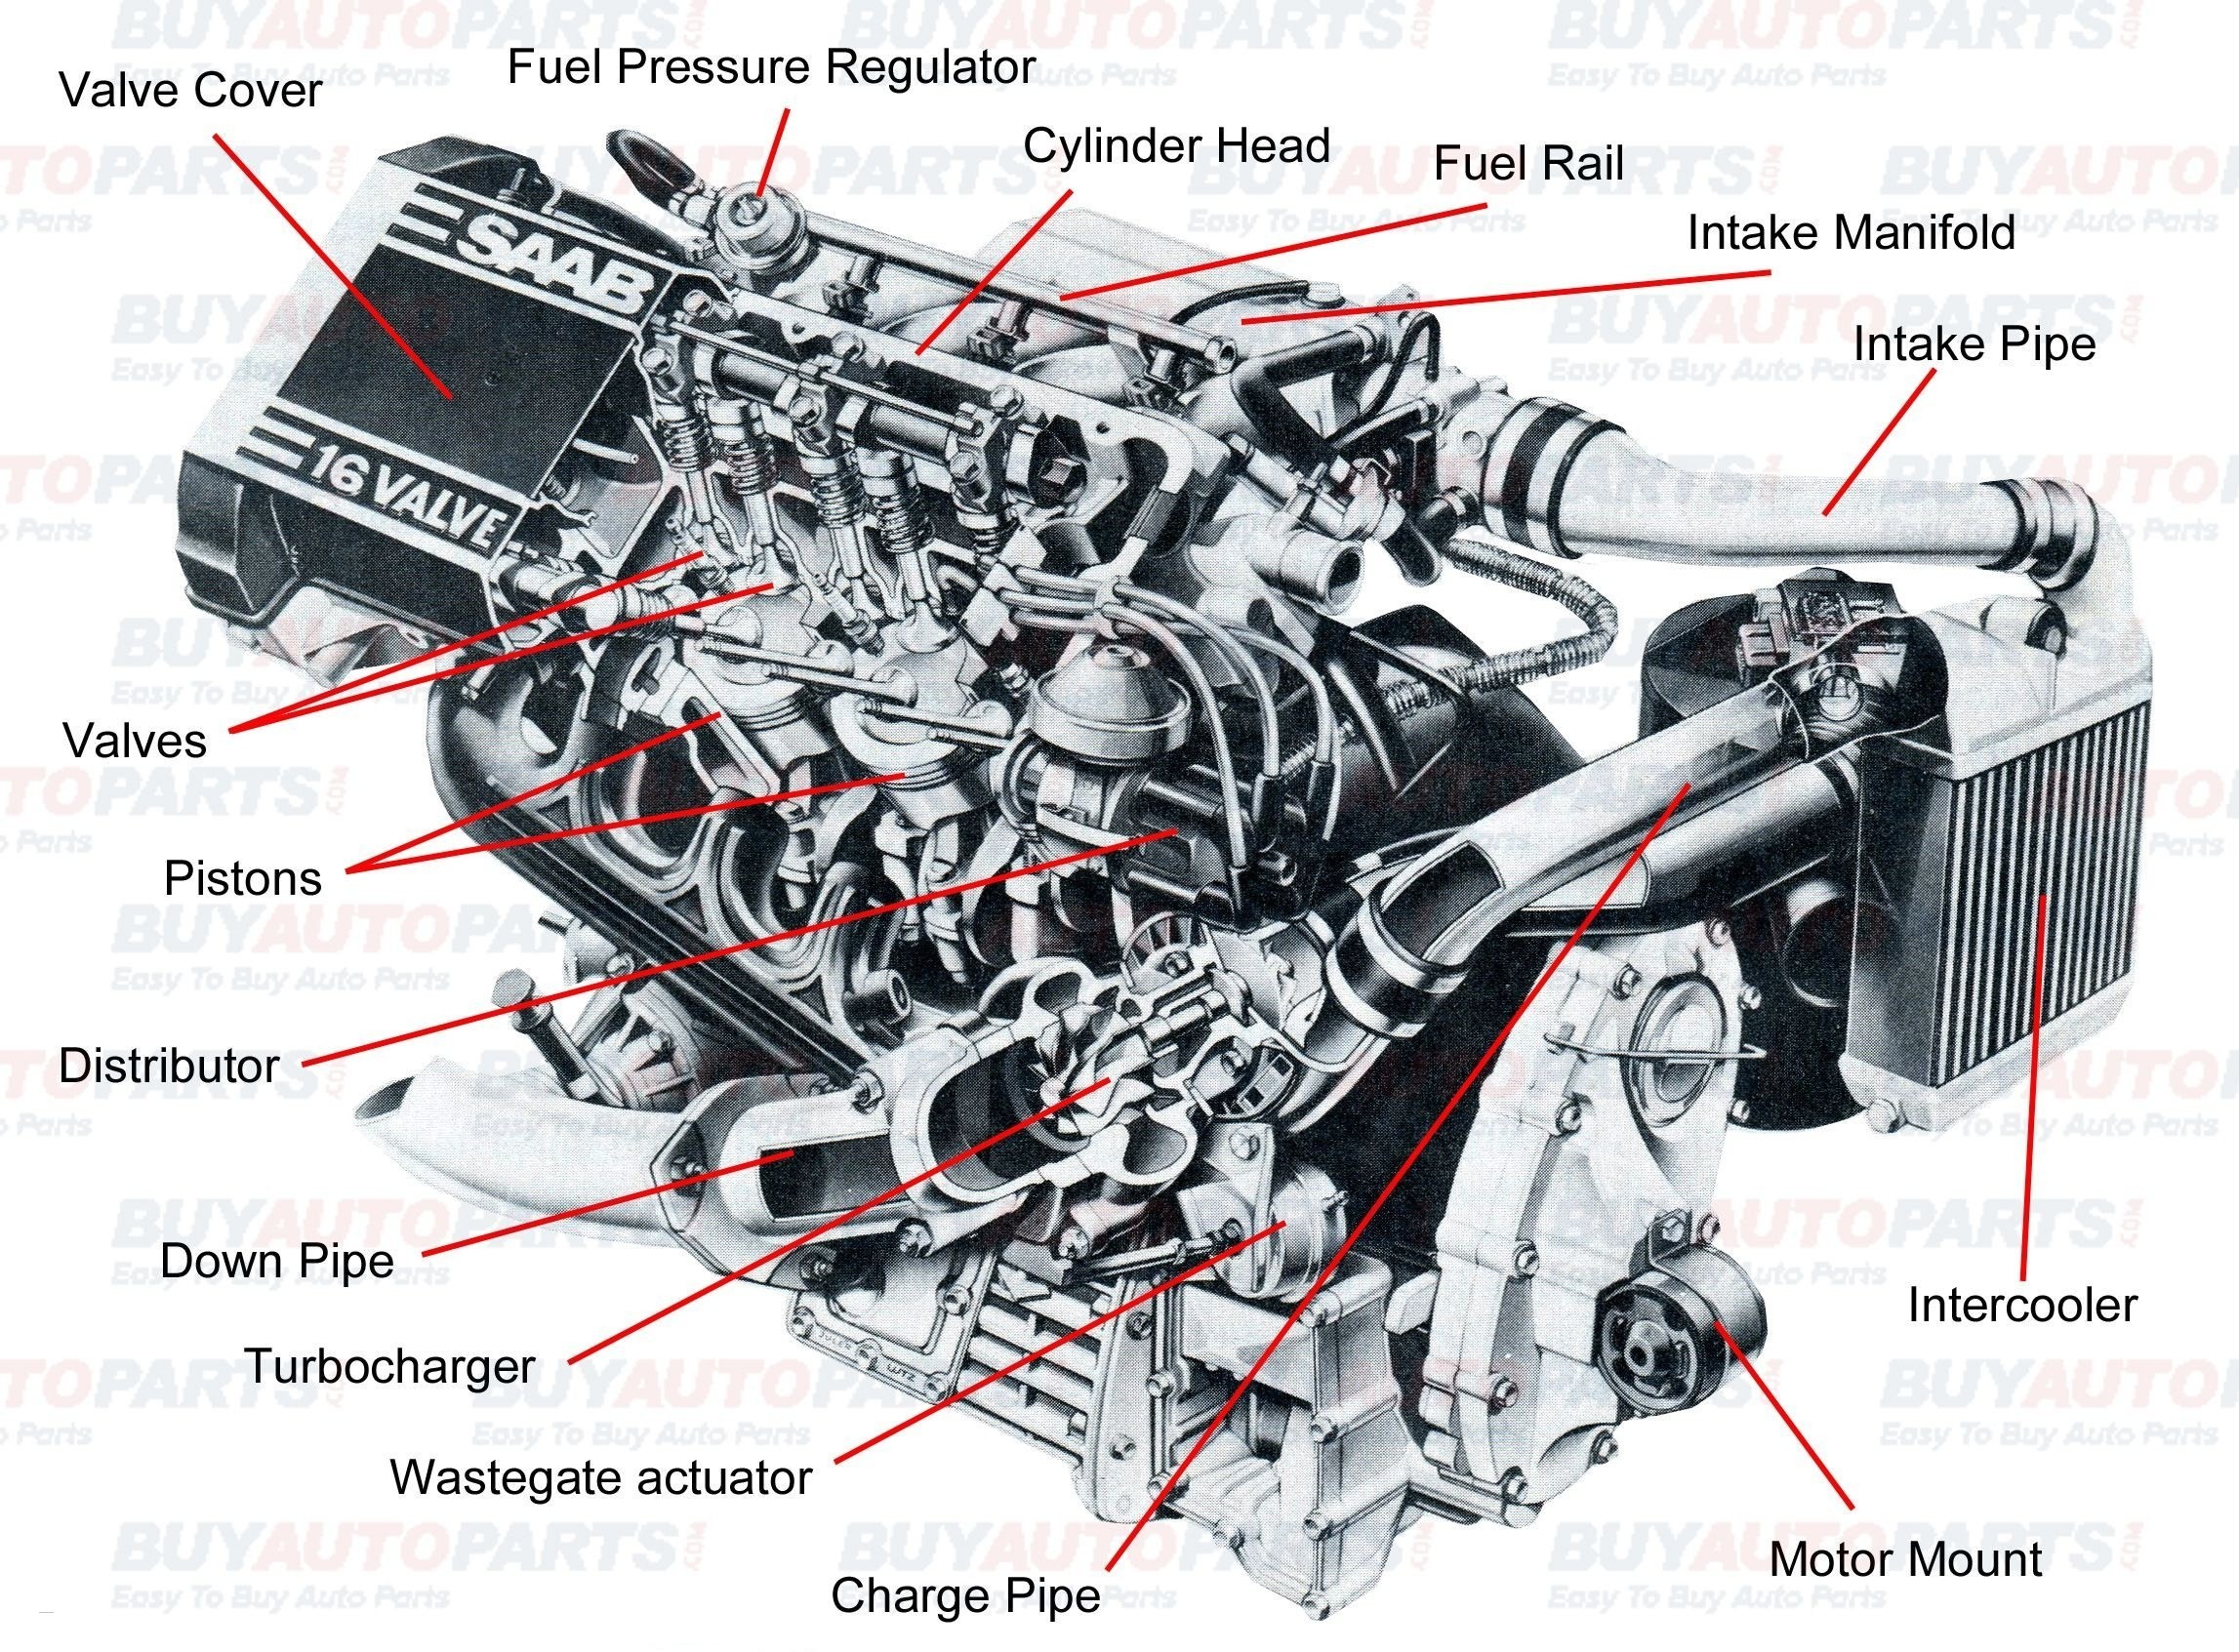 V8 Motor Diagram Wire Diagram New Car Diagram Unique Car Parts and Diagrams Insignia Of V8 Motor Diagram